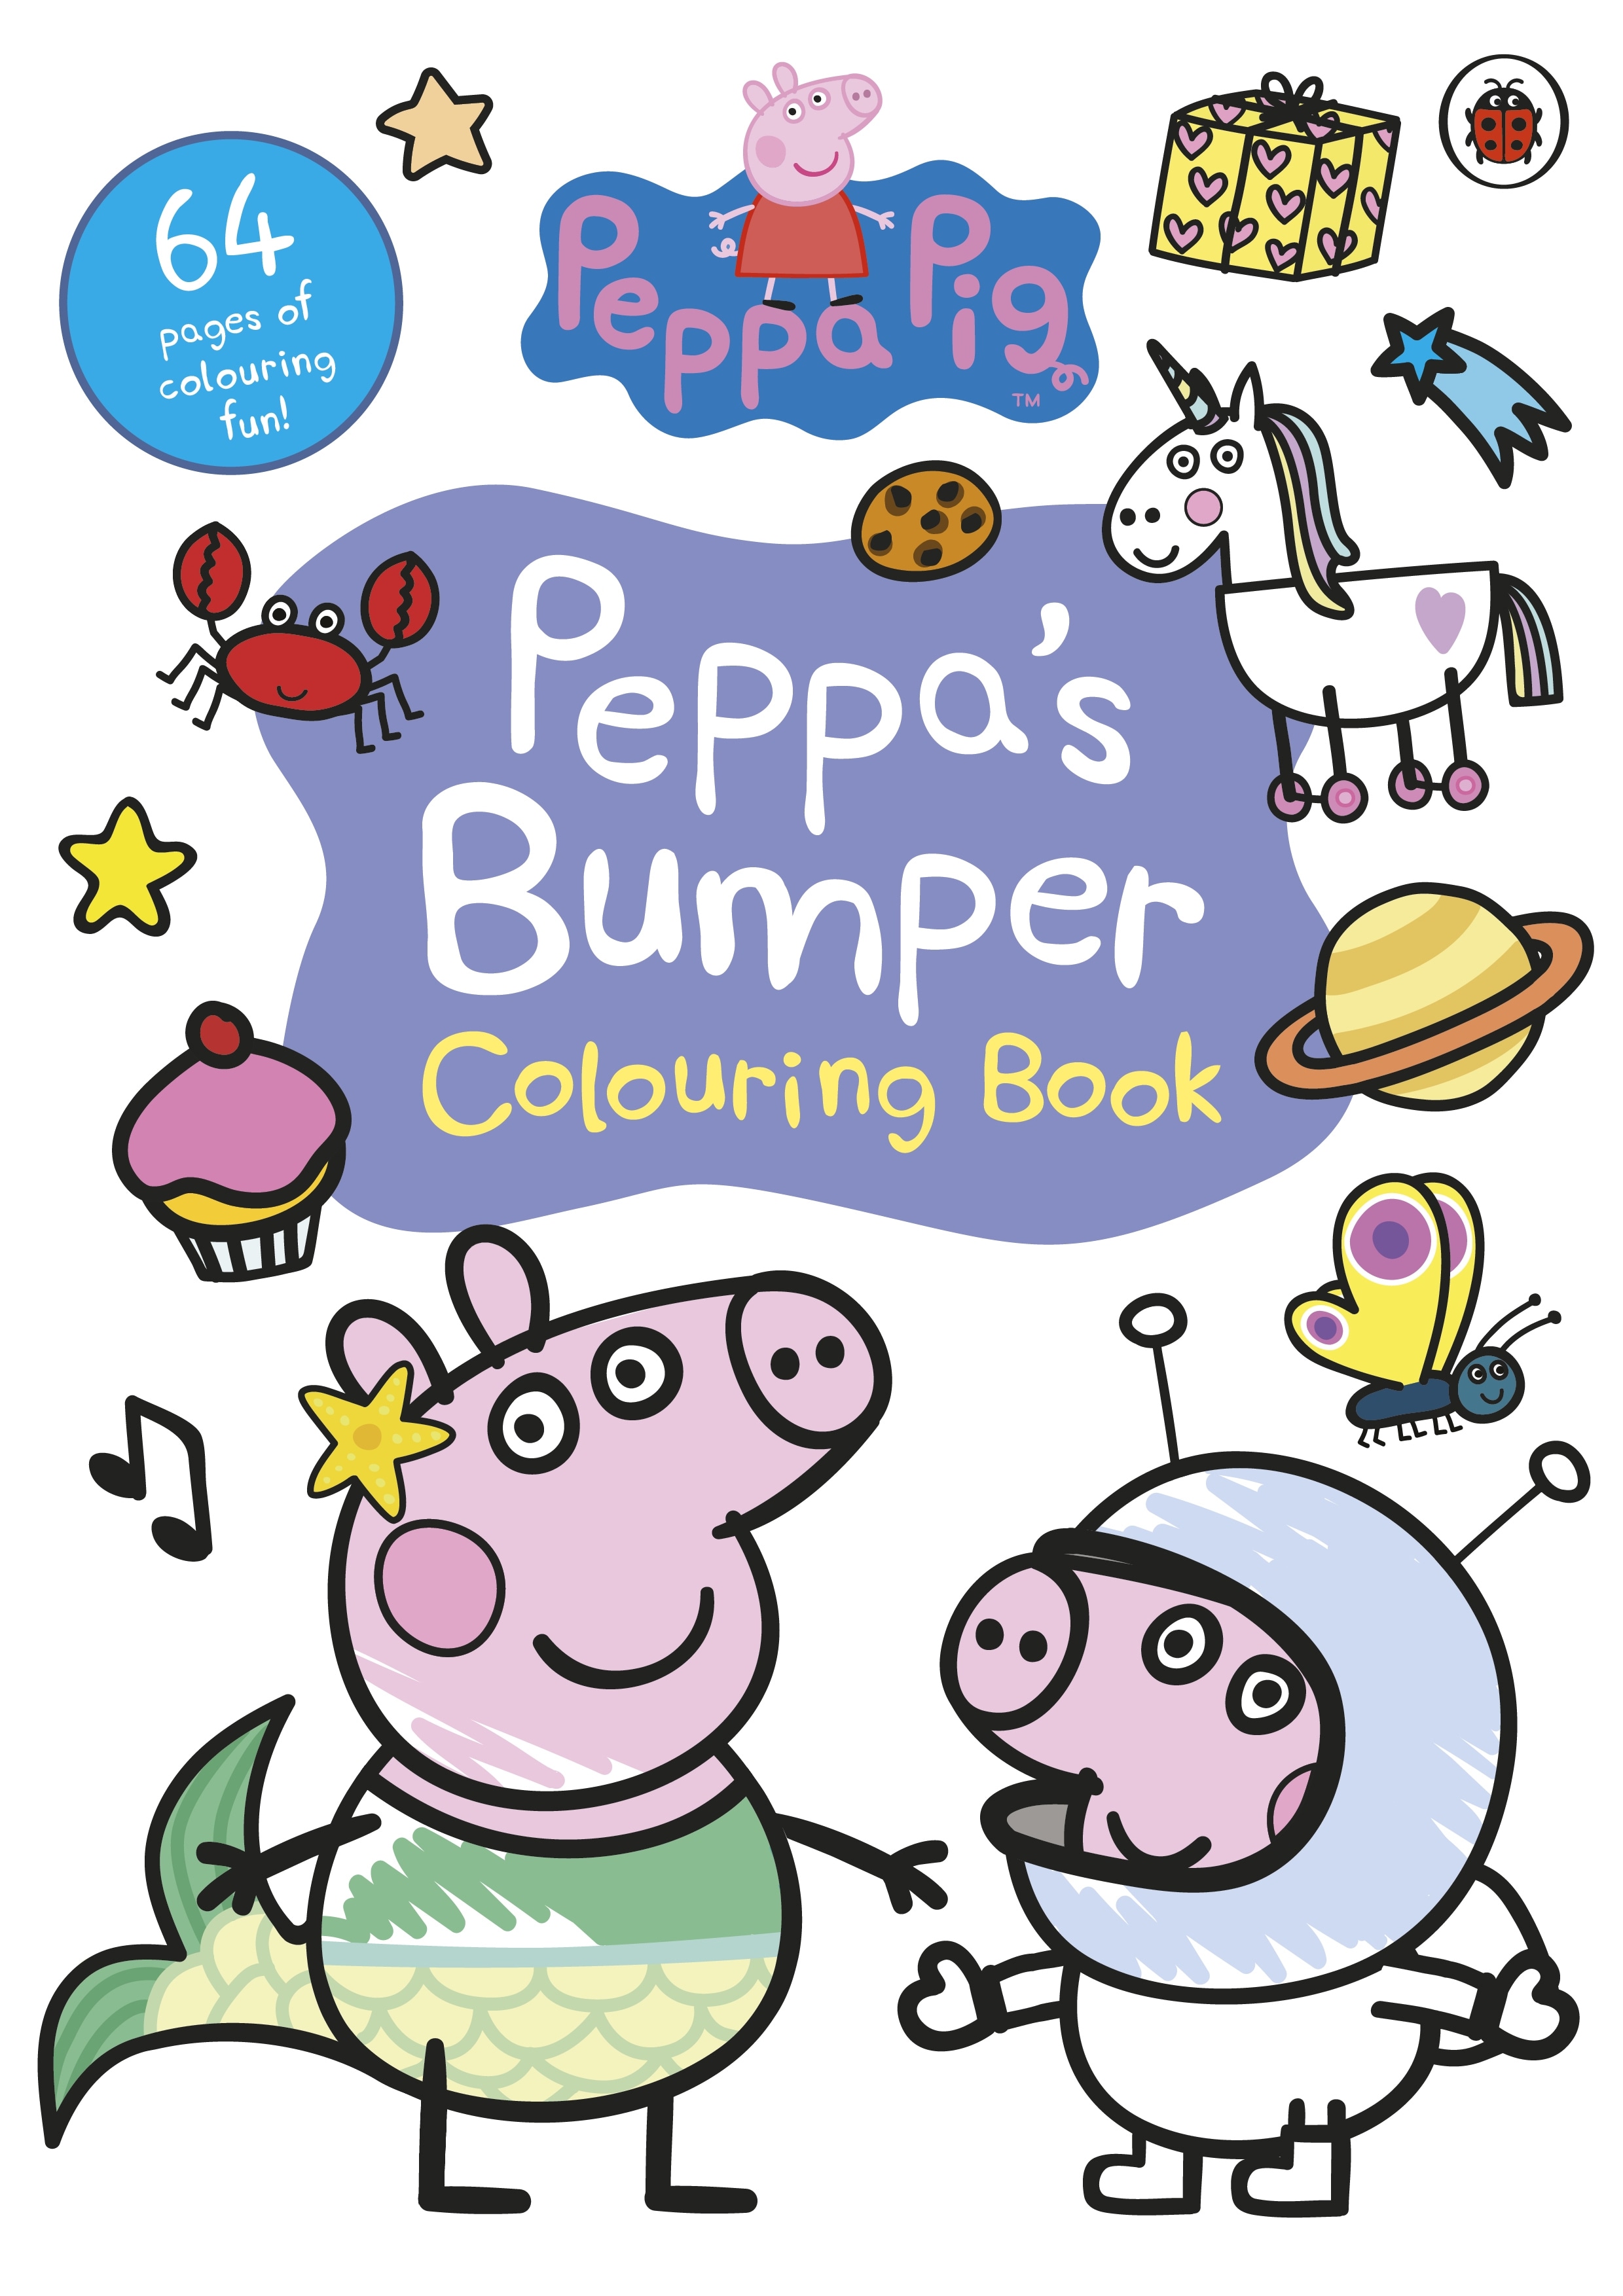 Book “Peppa Pig: Peppa’s Bumper Colouring Book” by Peppa Pig — February 25, 2021